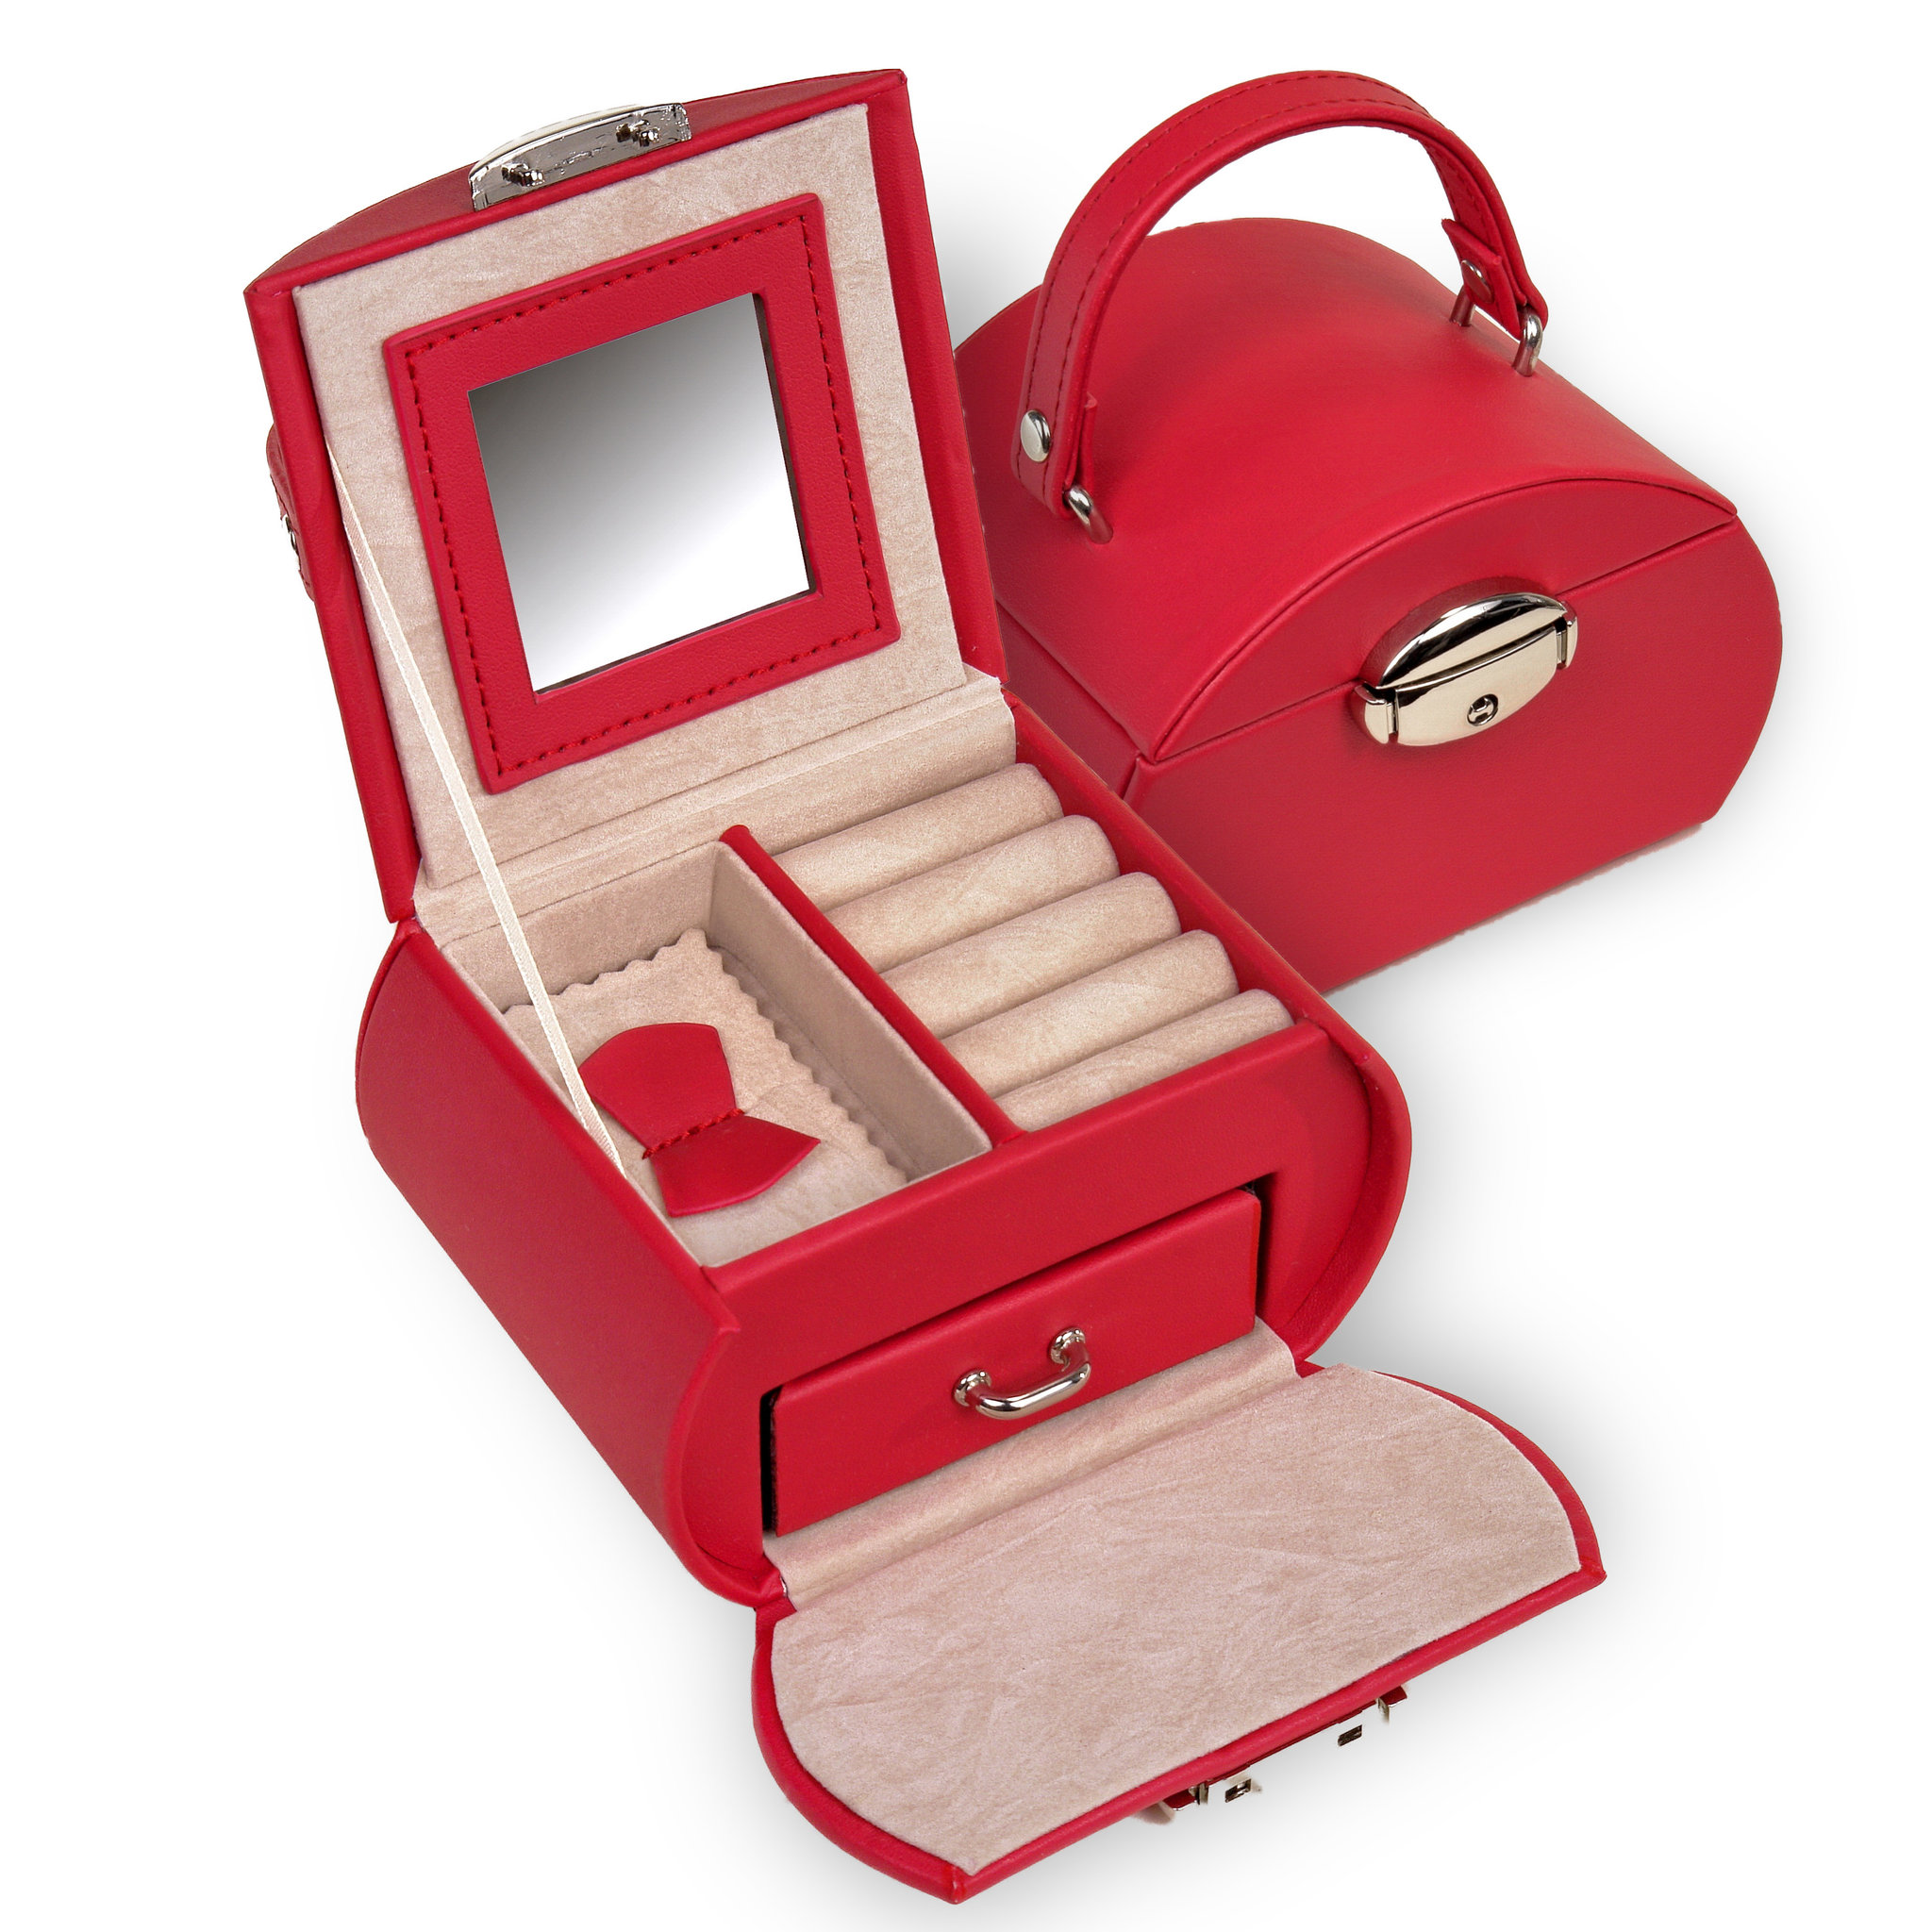 Girlie jewellery box standard / red